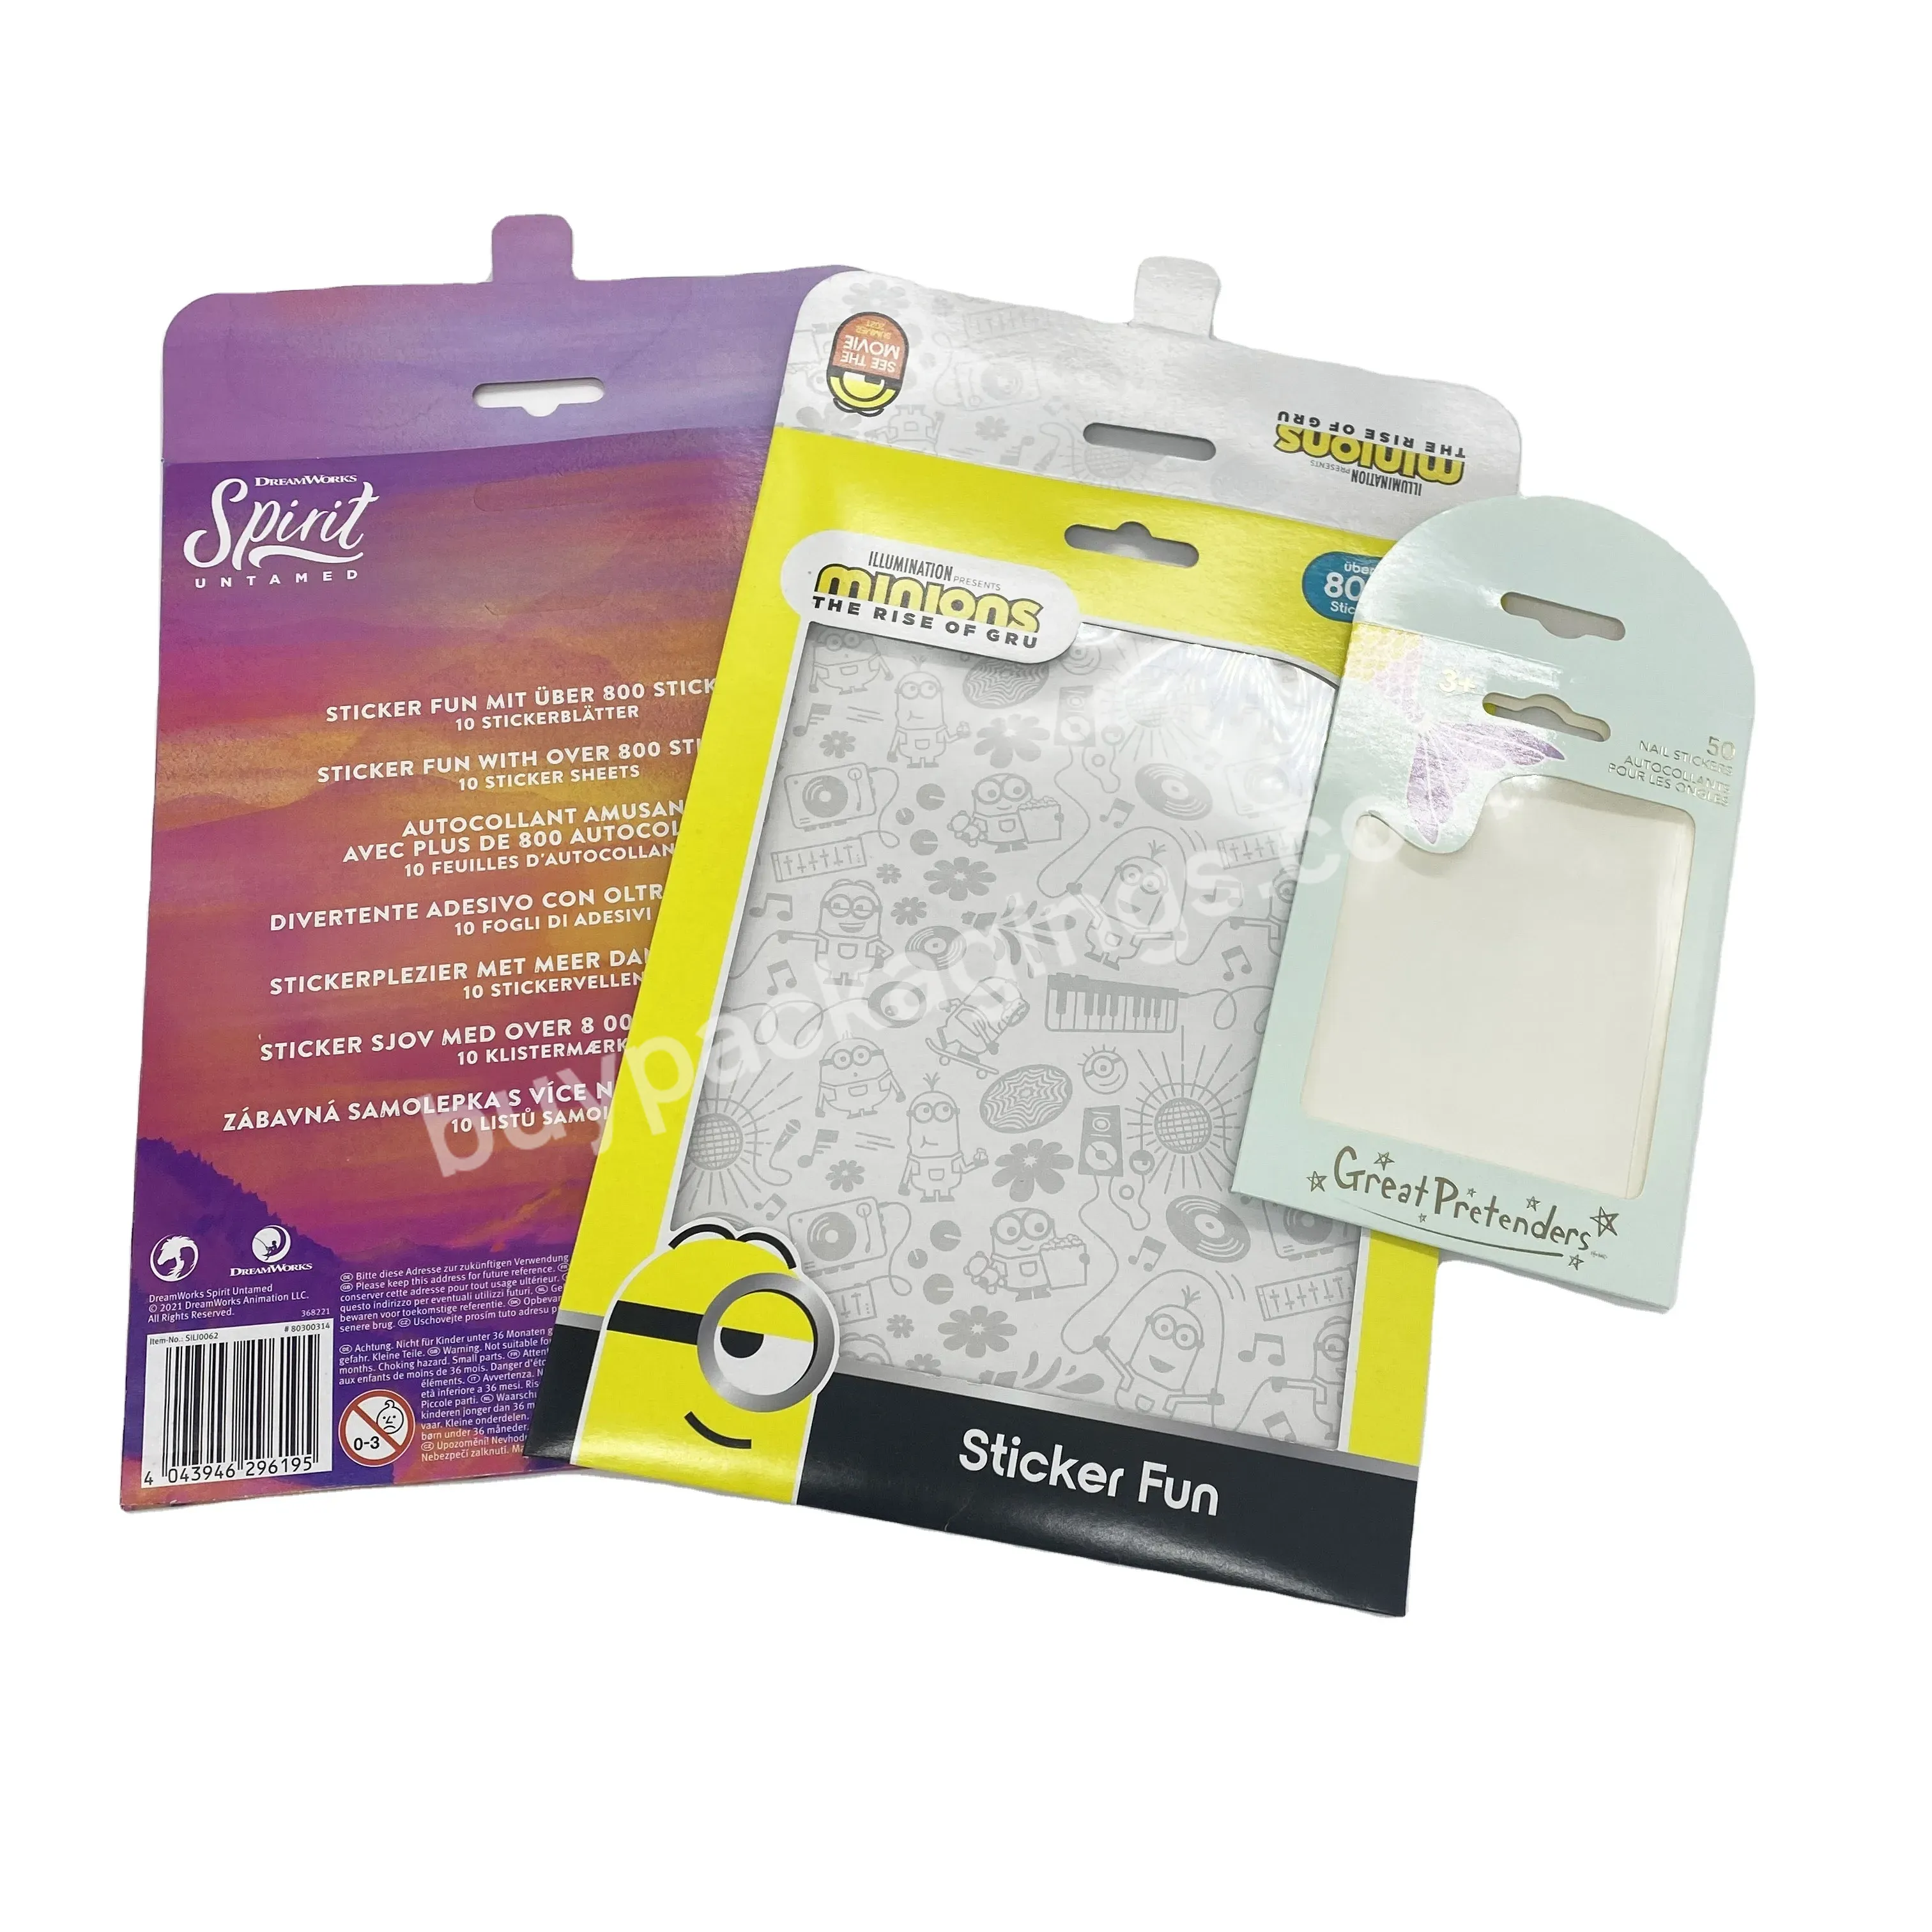 Custom Printed Single Eyeshadow Jewelry Accessory Packaging Envelope With Transparent Window